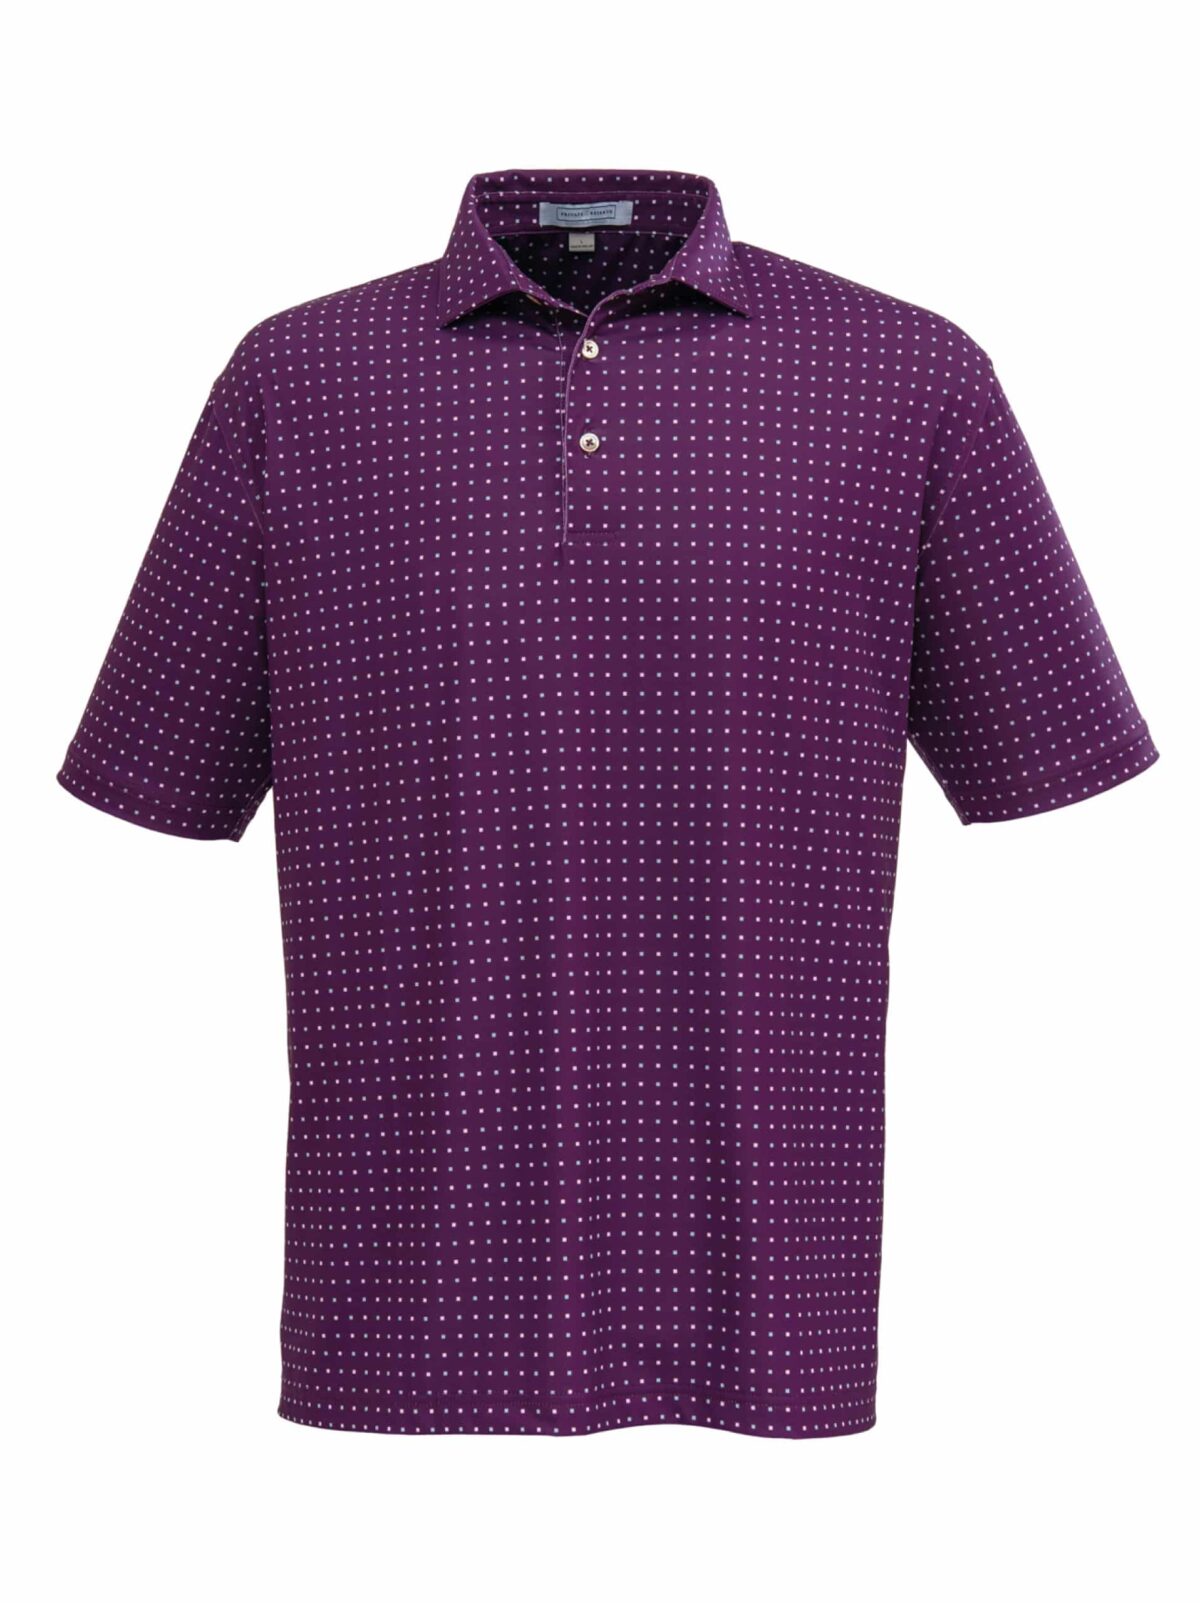 mens purple grape print golf polo shirt